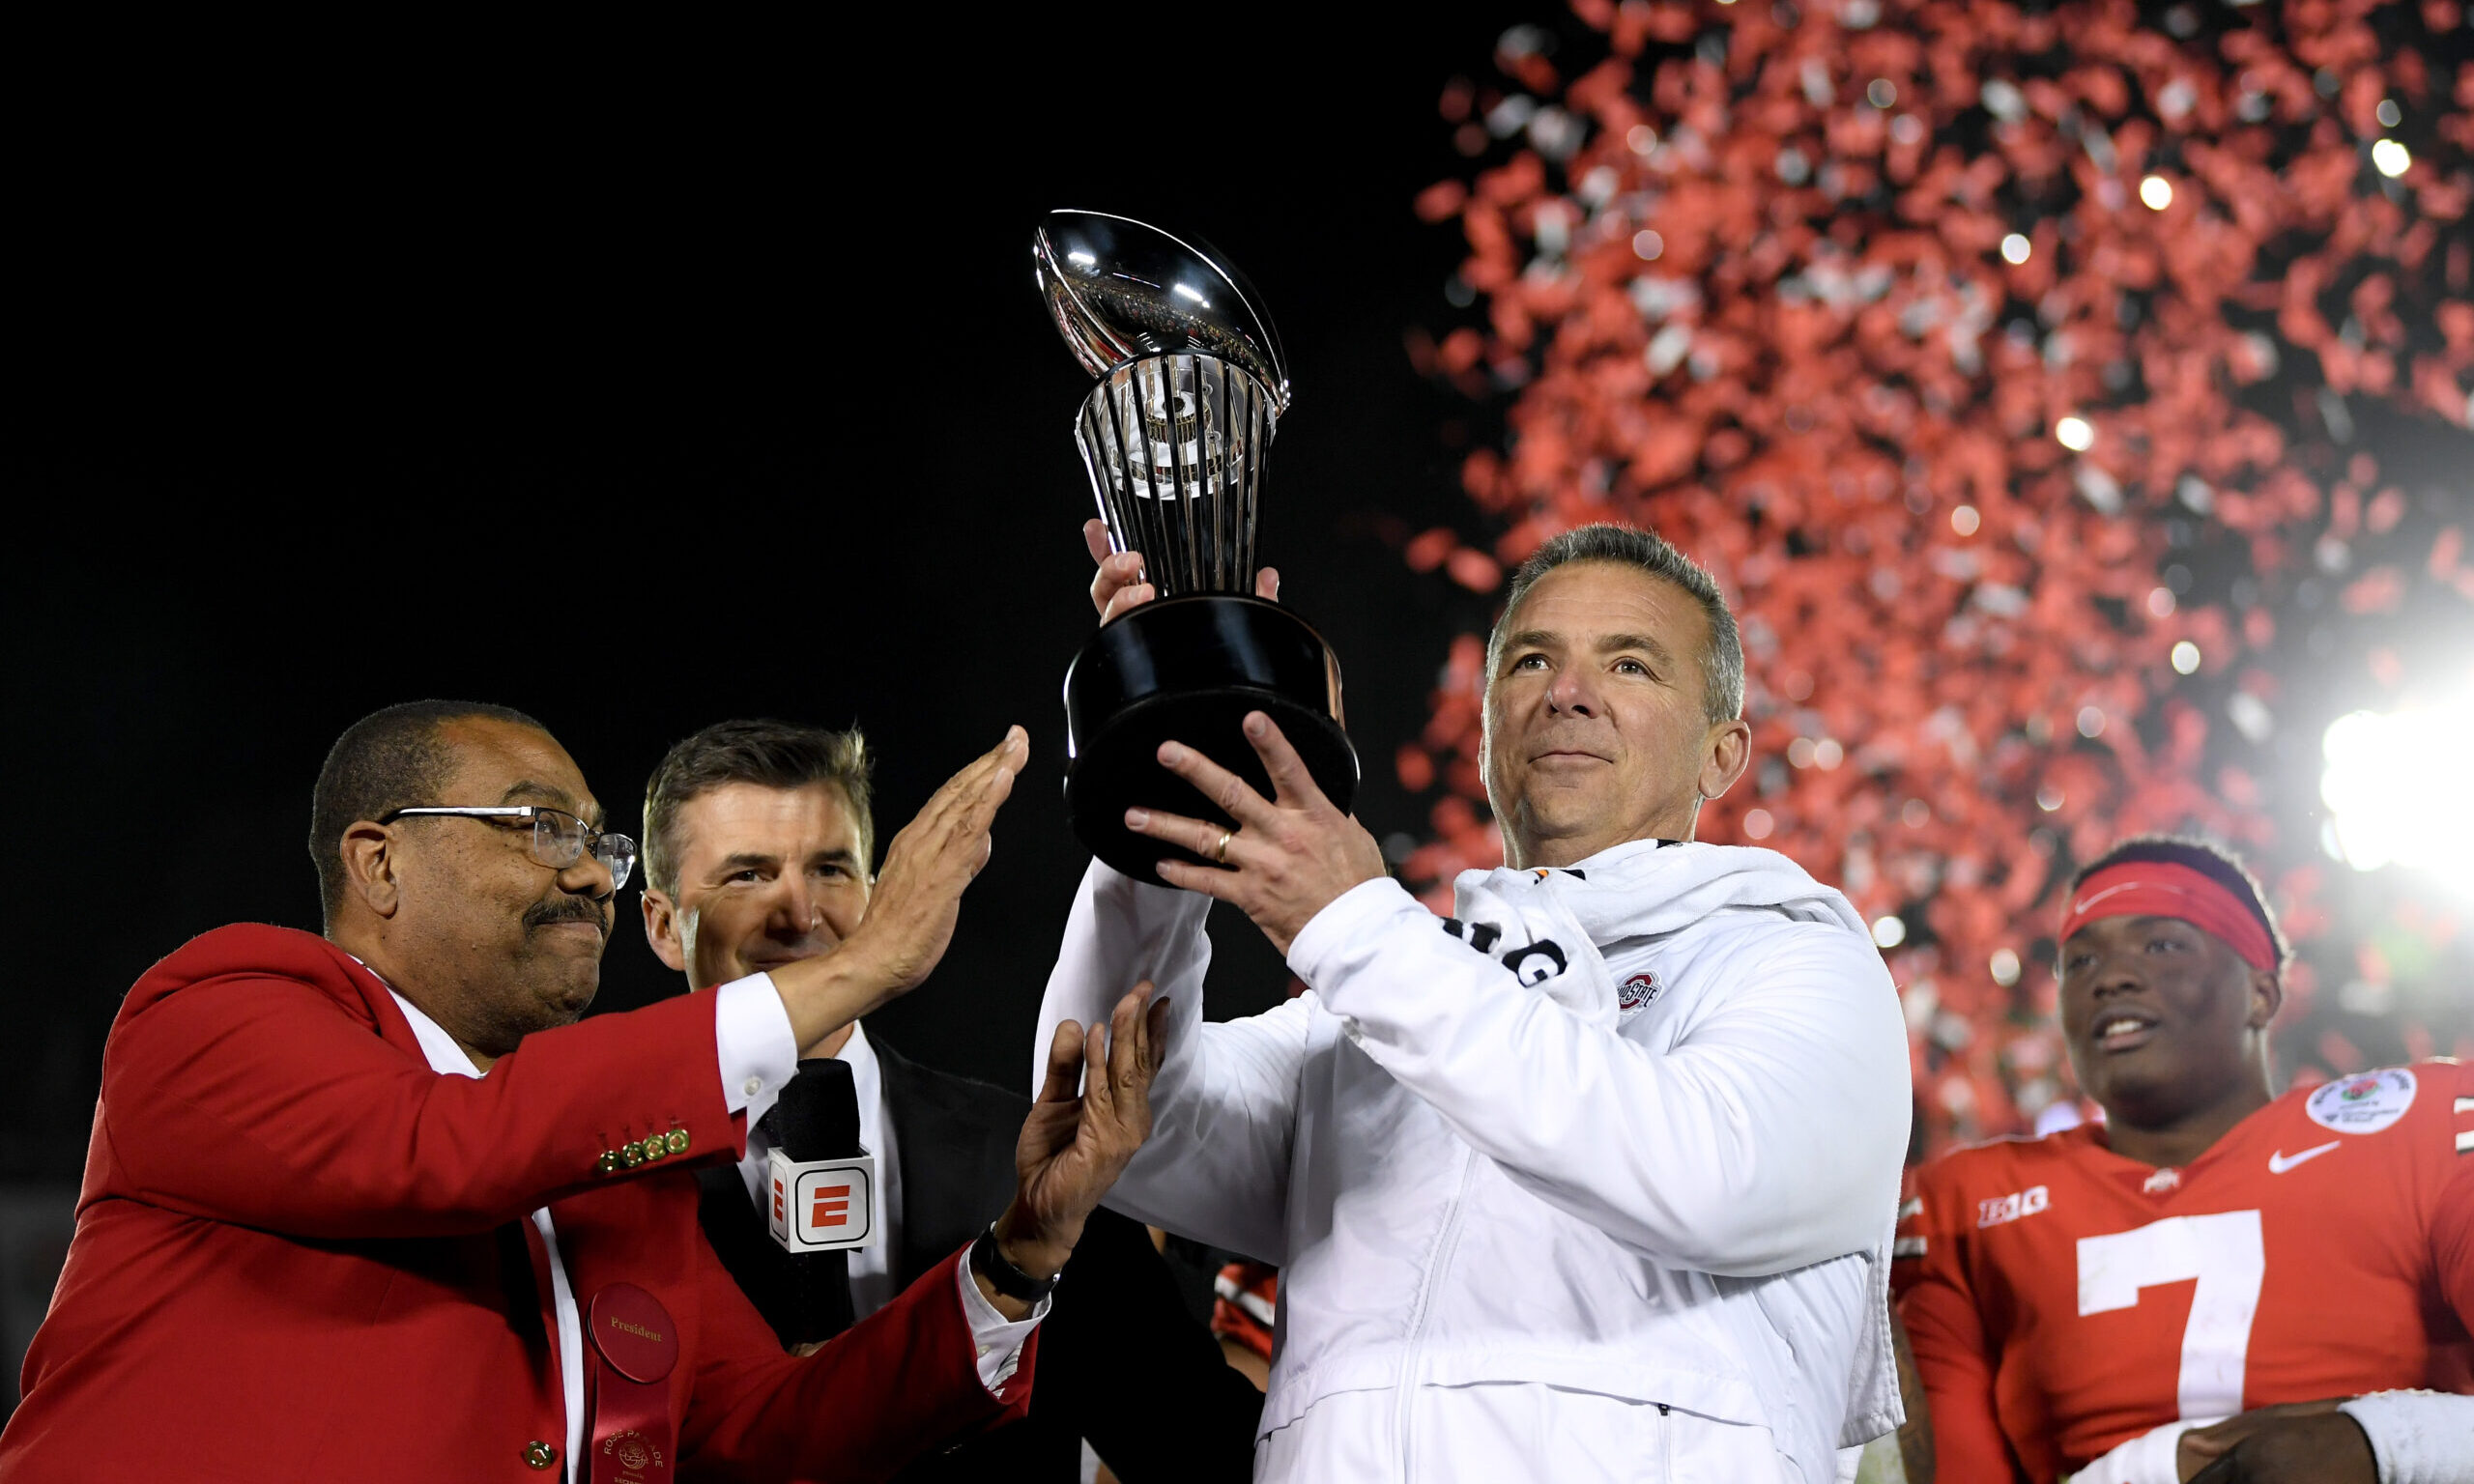 PASADENA, CA - JANUARY 01: Ohio State Buckeyes head coach Urban Meyer with the Rose Bowl trophy cel...